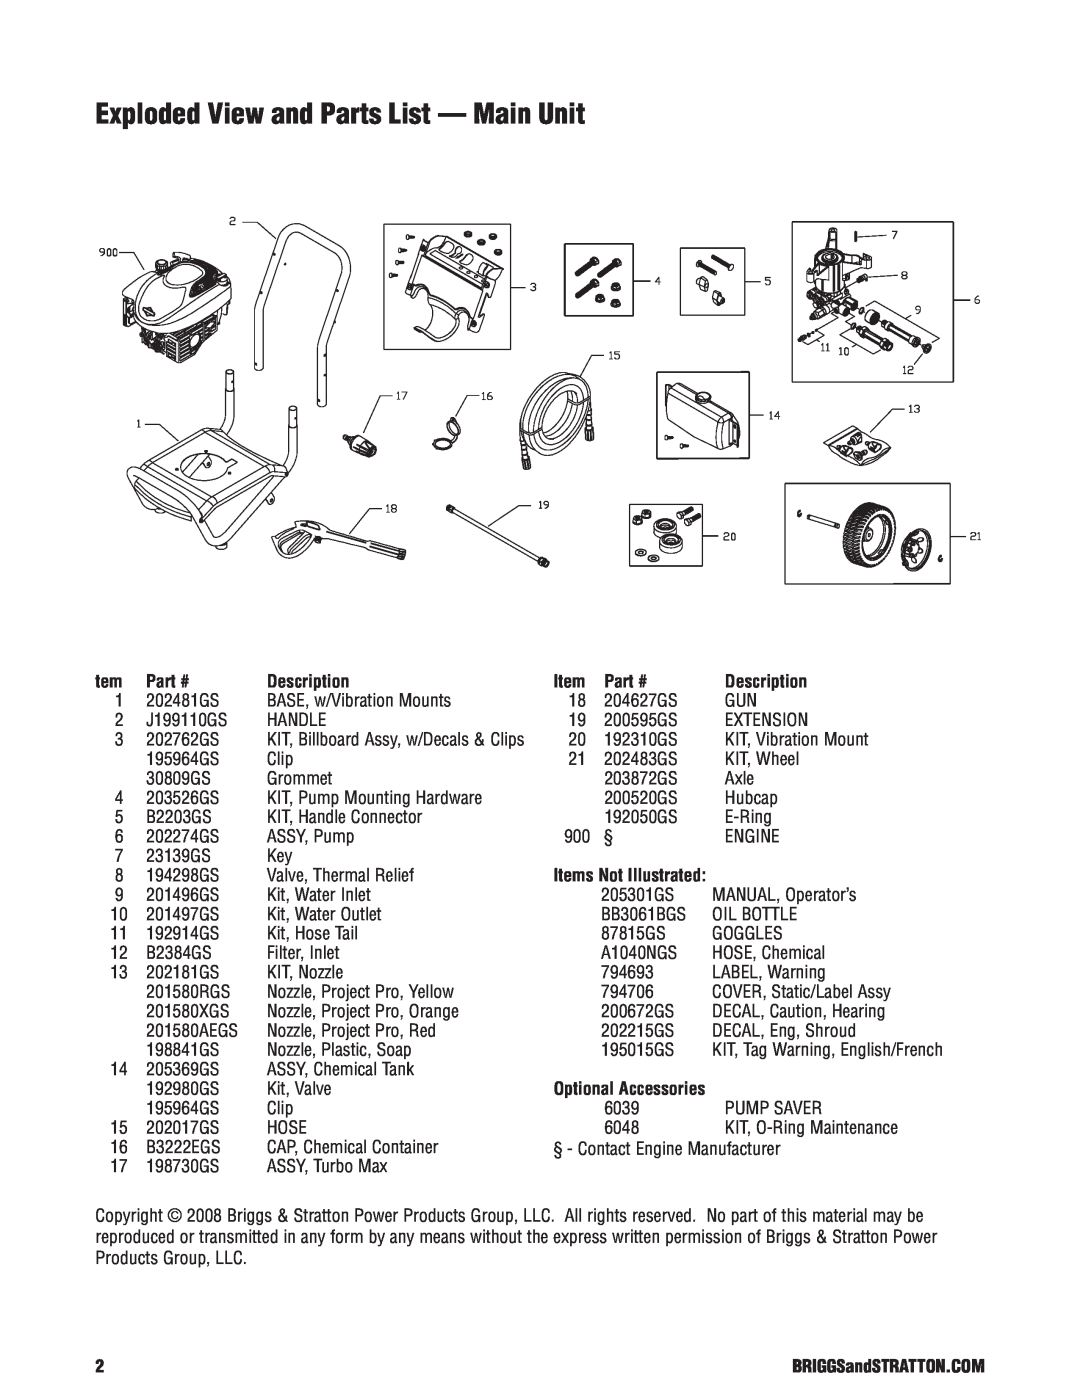 Briggs & Stratton 020306-3 manual Exploded View and Parts List - Main Unit, Part #, Description 